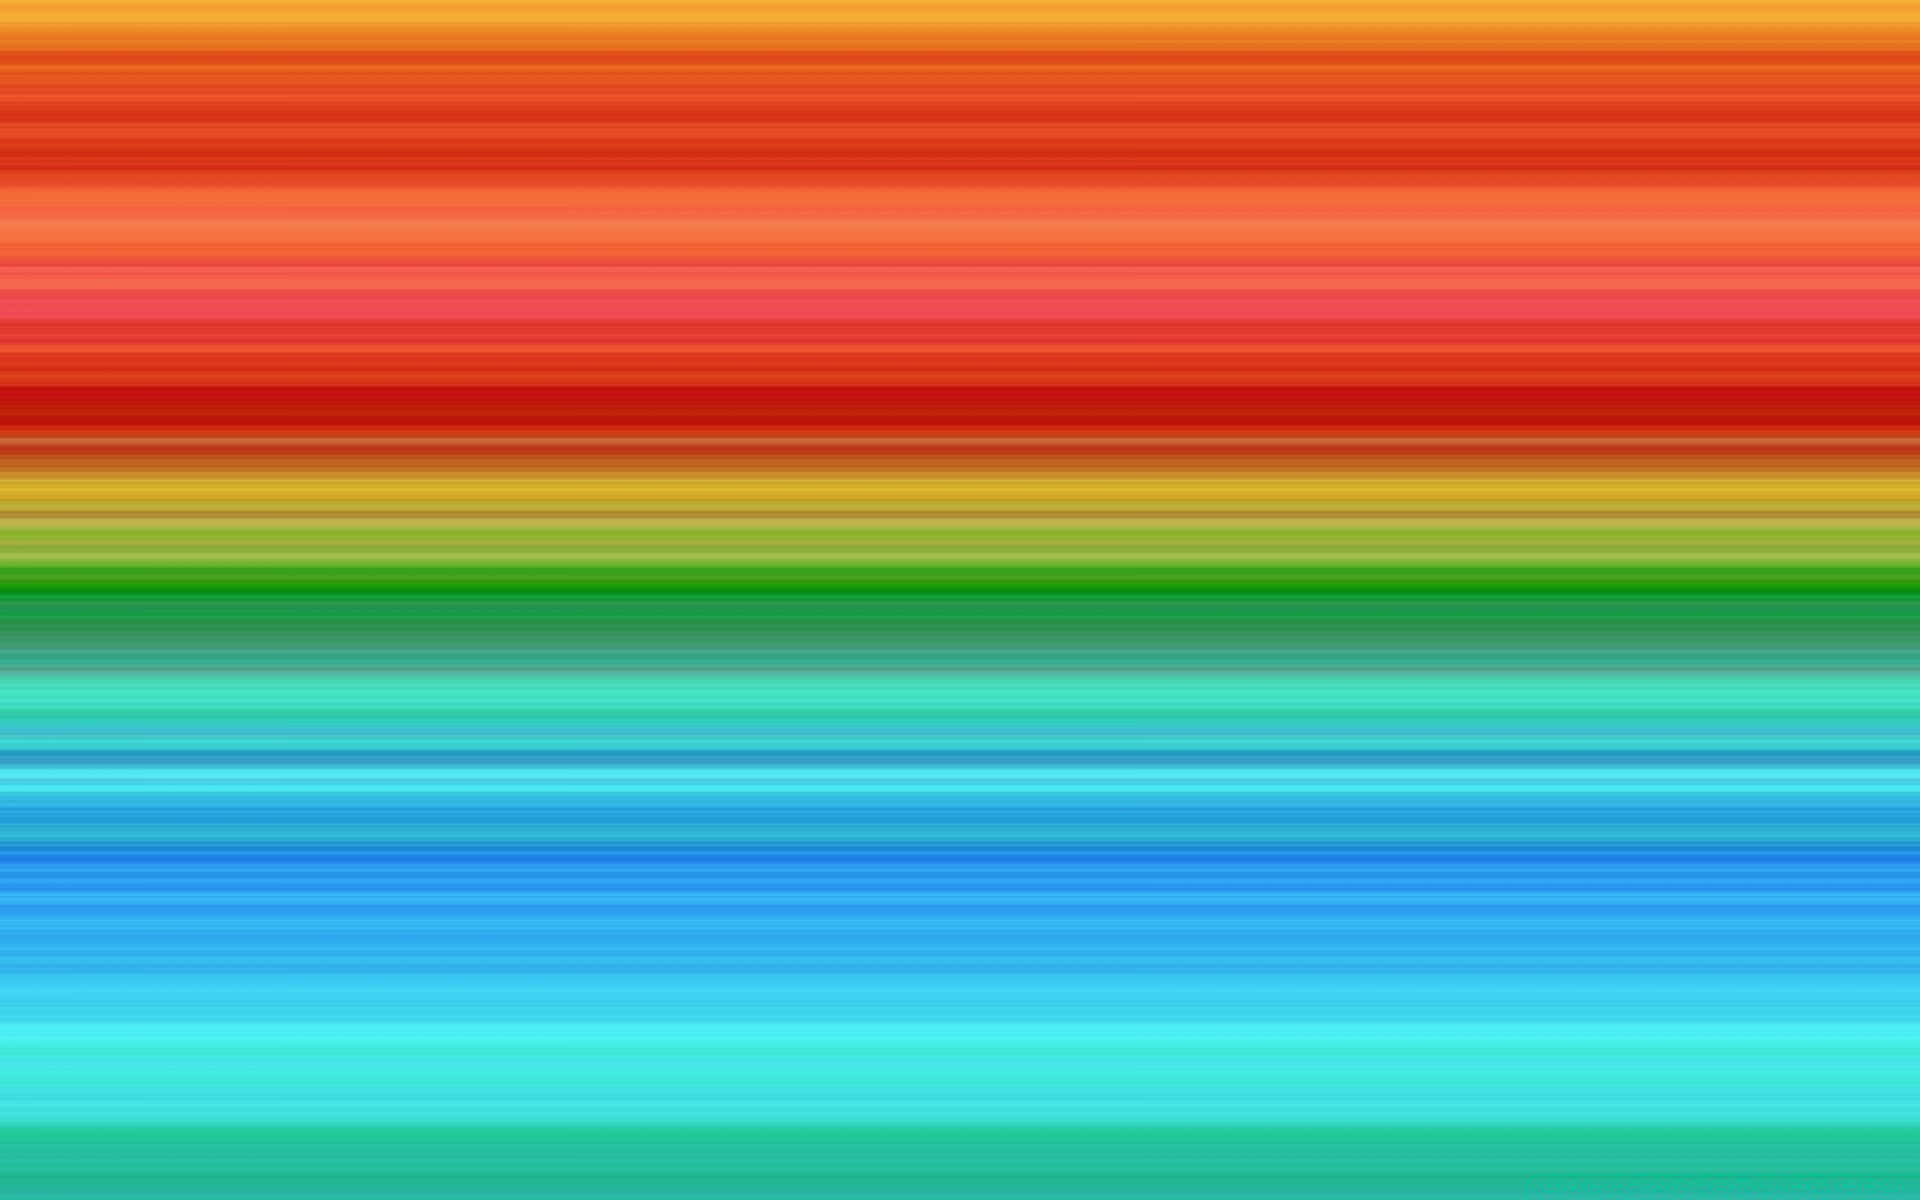 Vibrant Color Spectrum.jpg Wallpaper